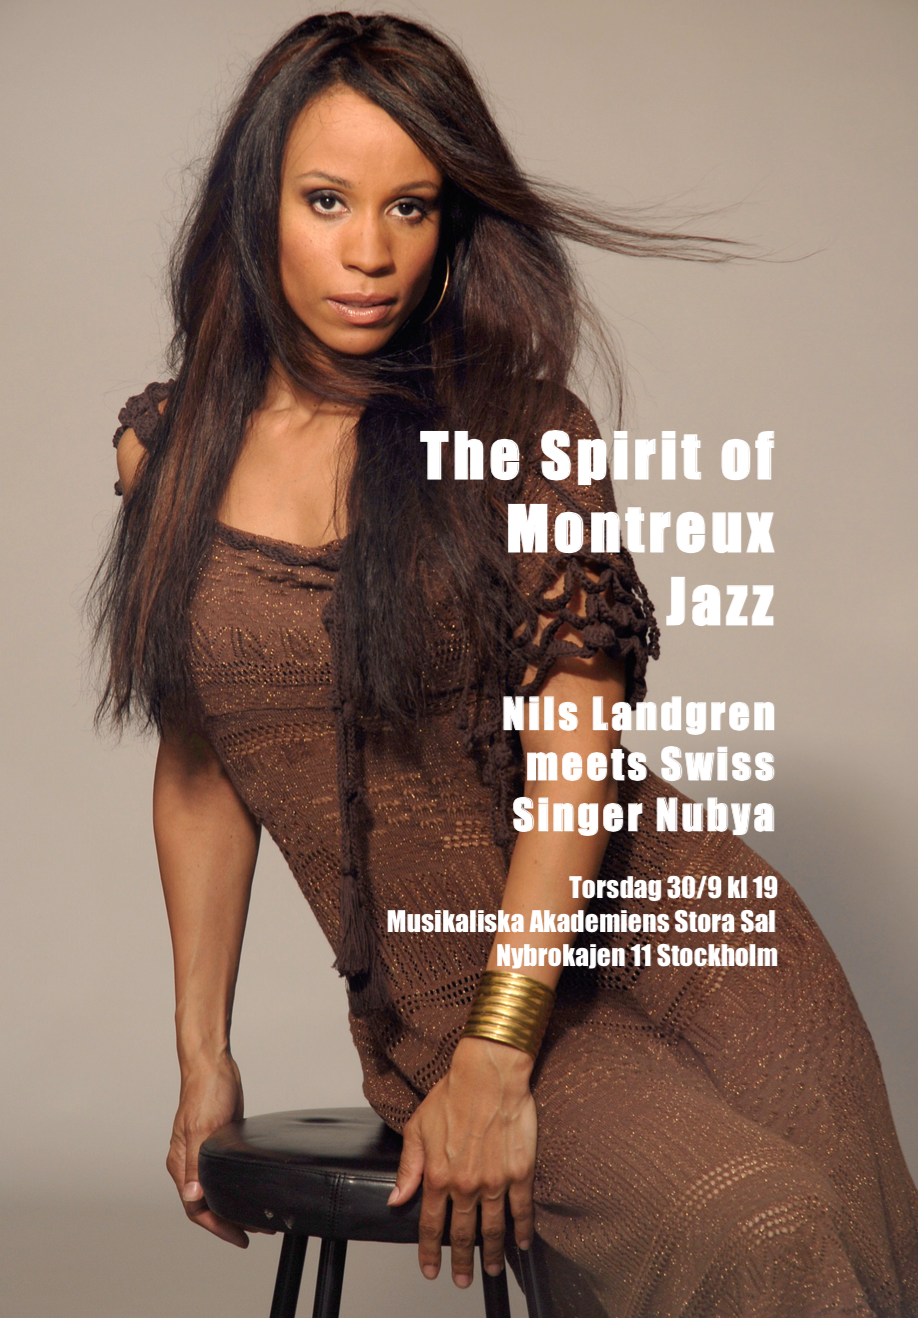 “The Spirit of Montreux Jazz”